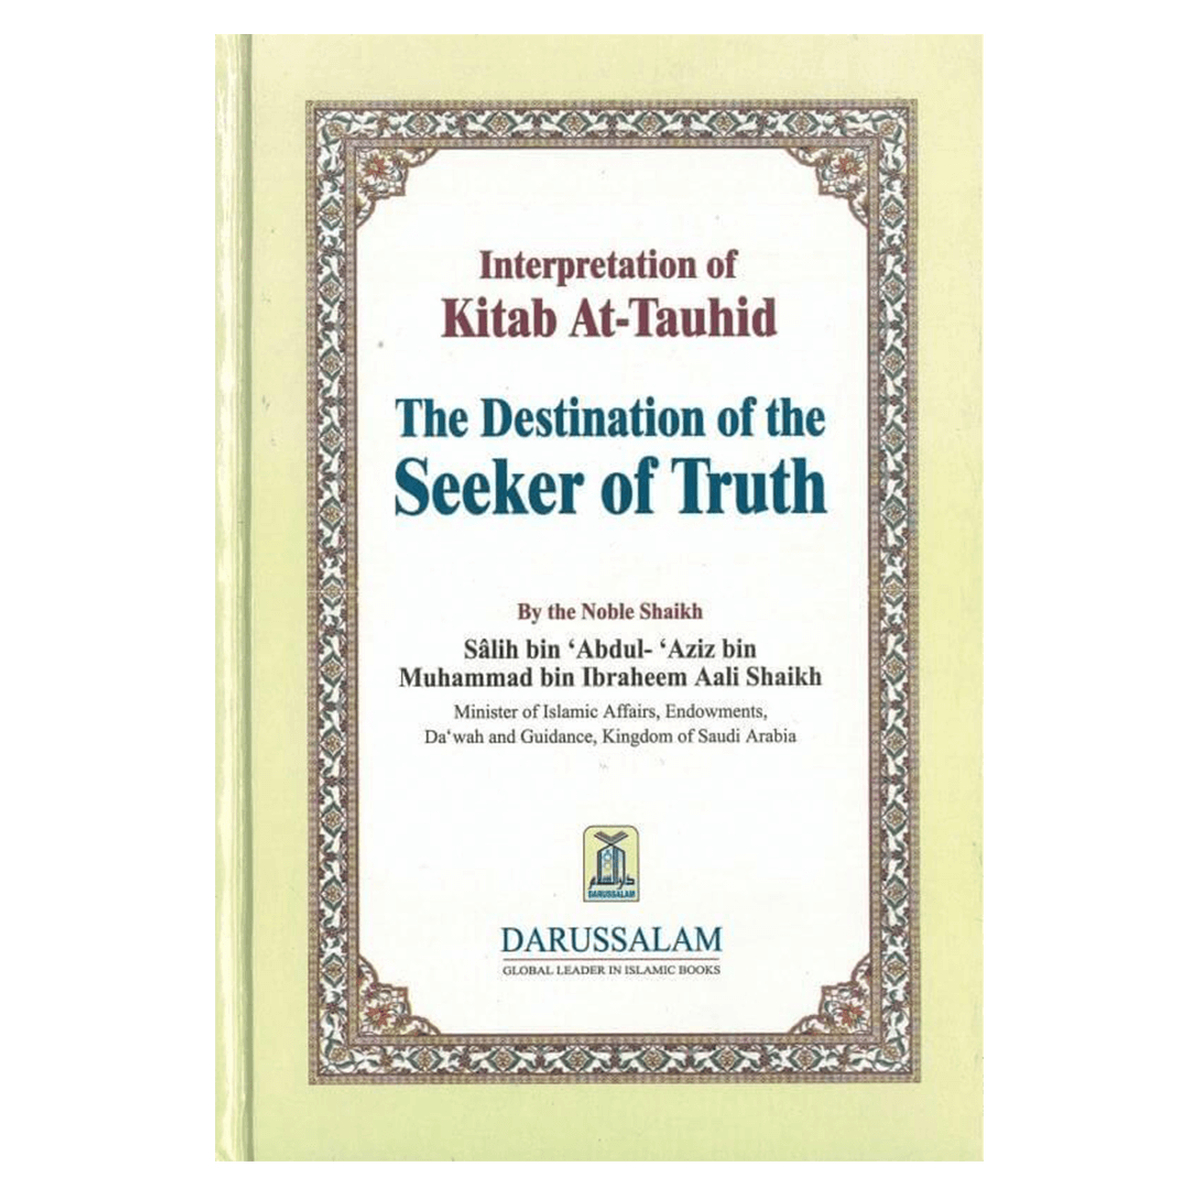 Interpretation of Kitab At Tauhid (The destination of the Seeker of Truth)